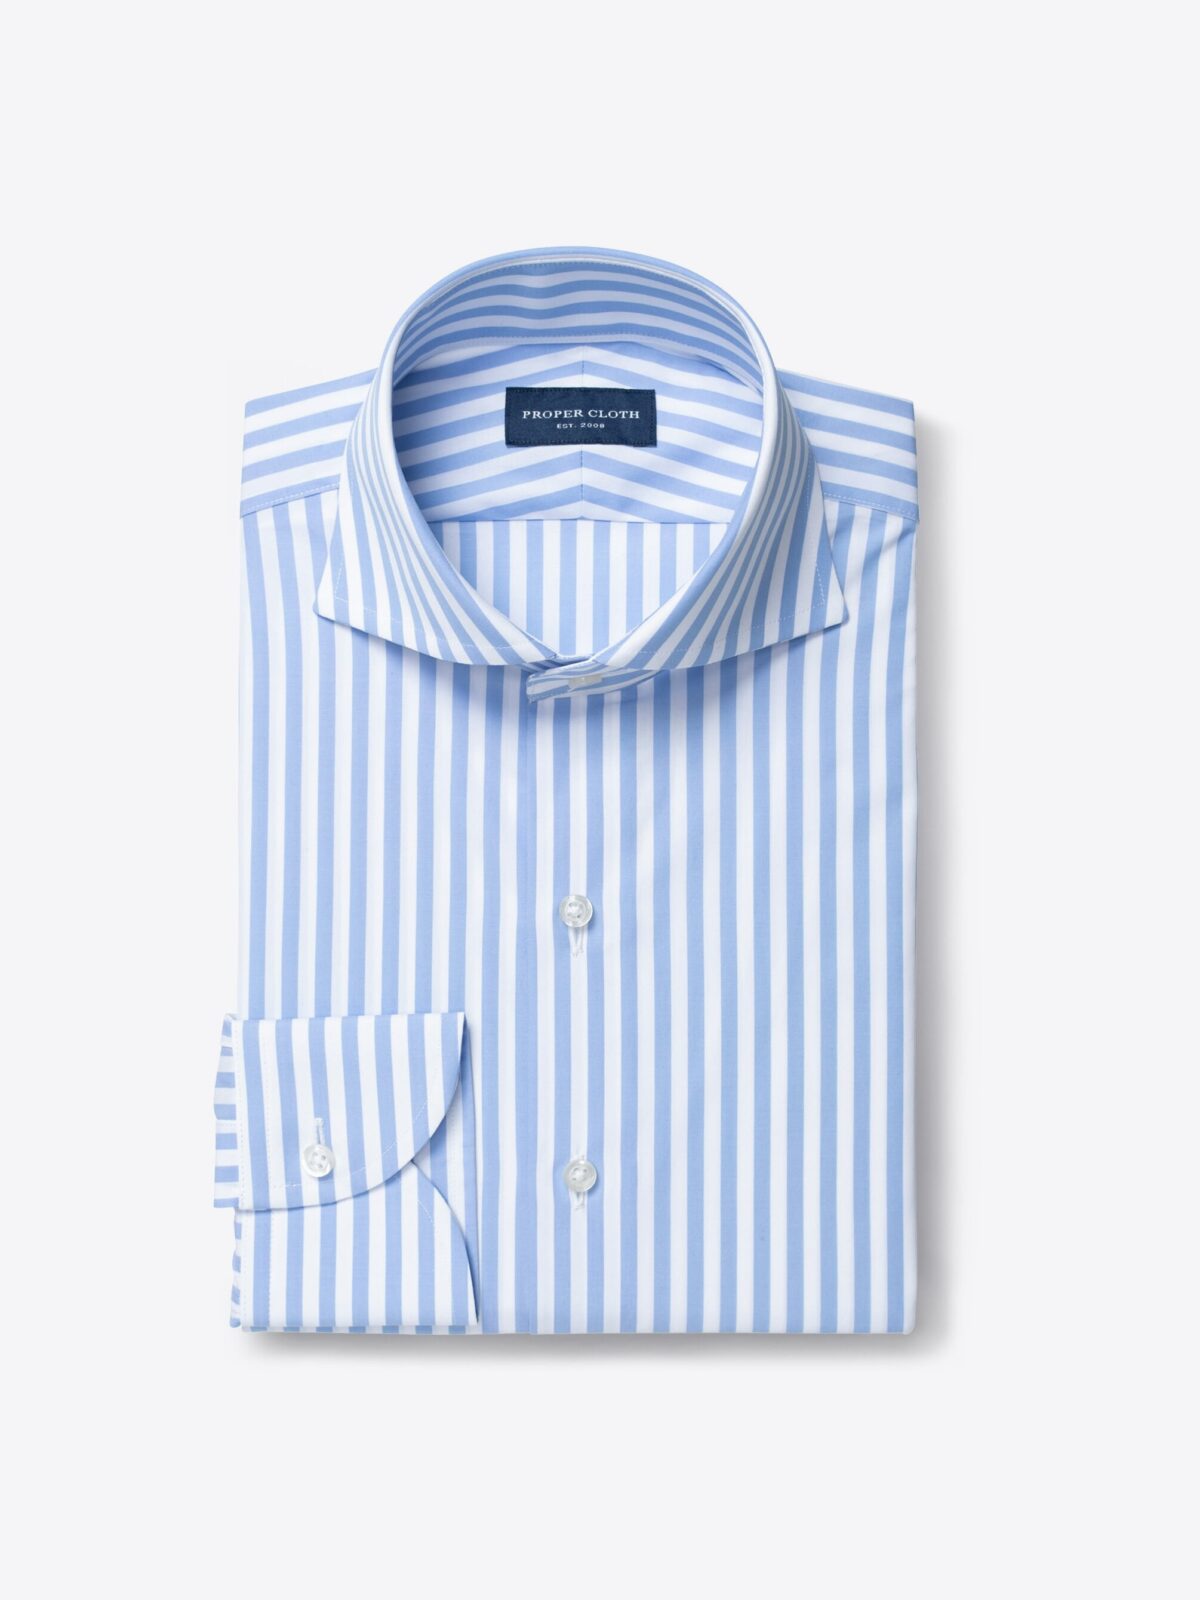 DJA Sea Island Light Blue Bengal Stripe Shirt by Proper Cloth